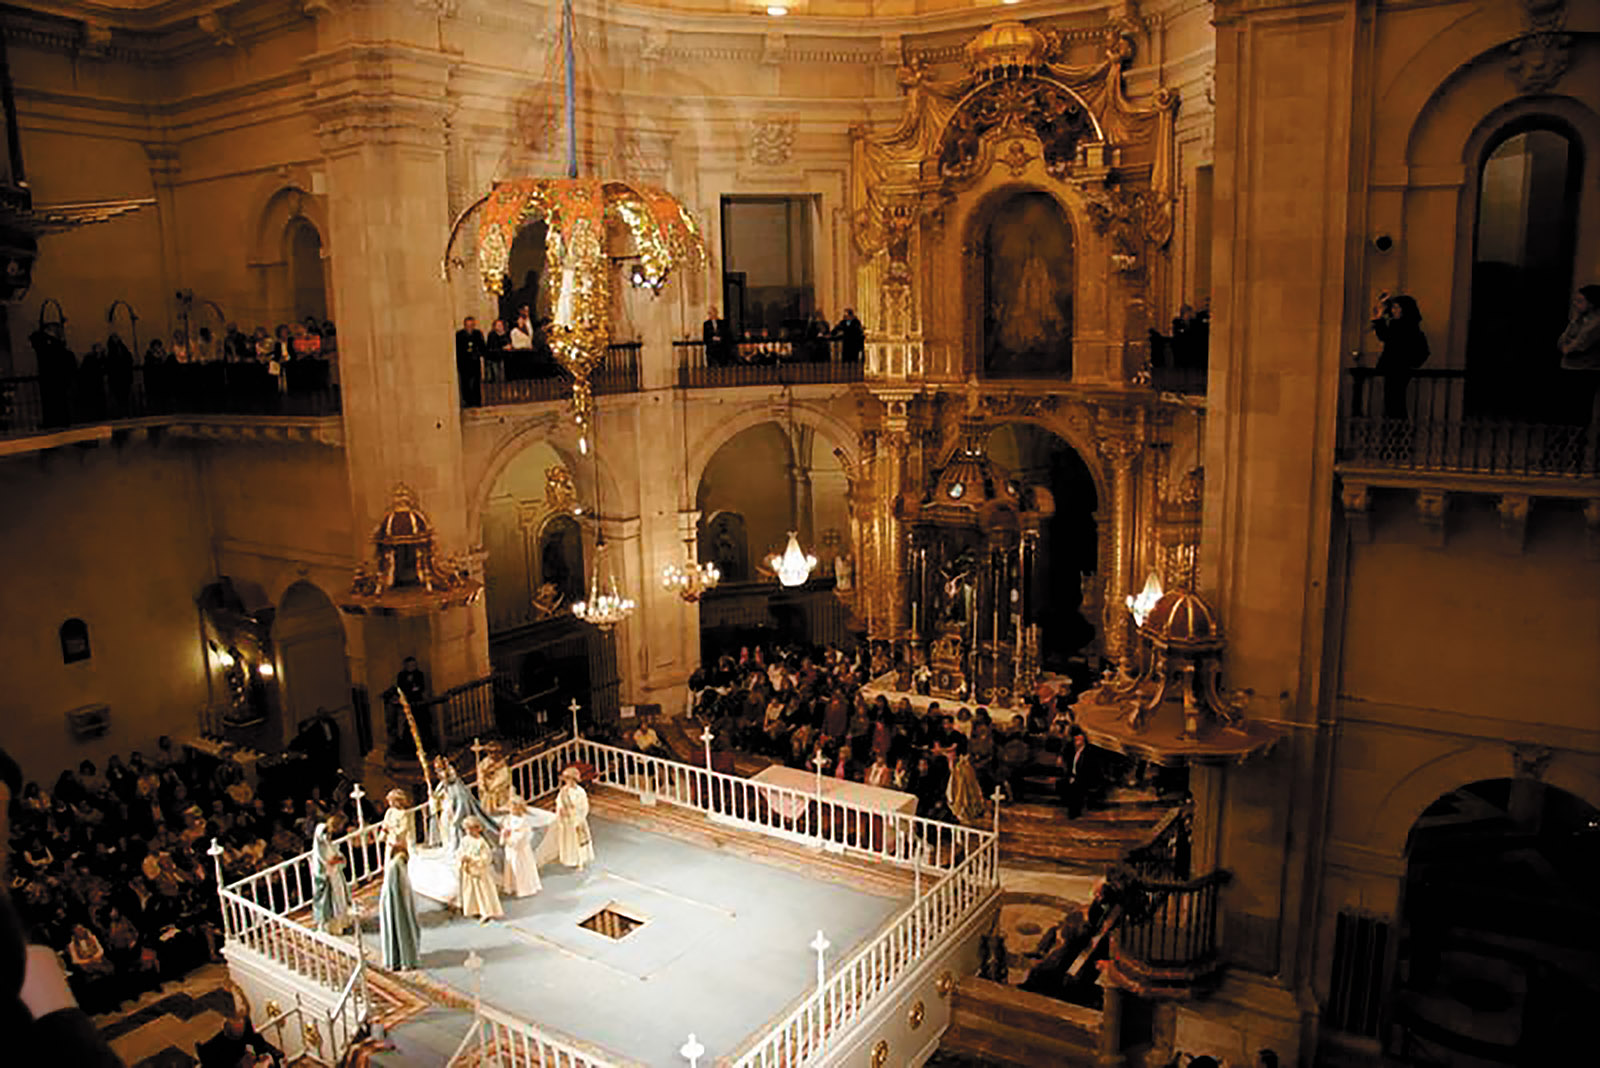 The festival of the Misteri d’Elx in the Basilica de Santa María, Elche, Spain, 2015